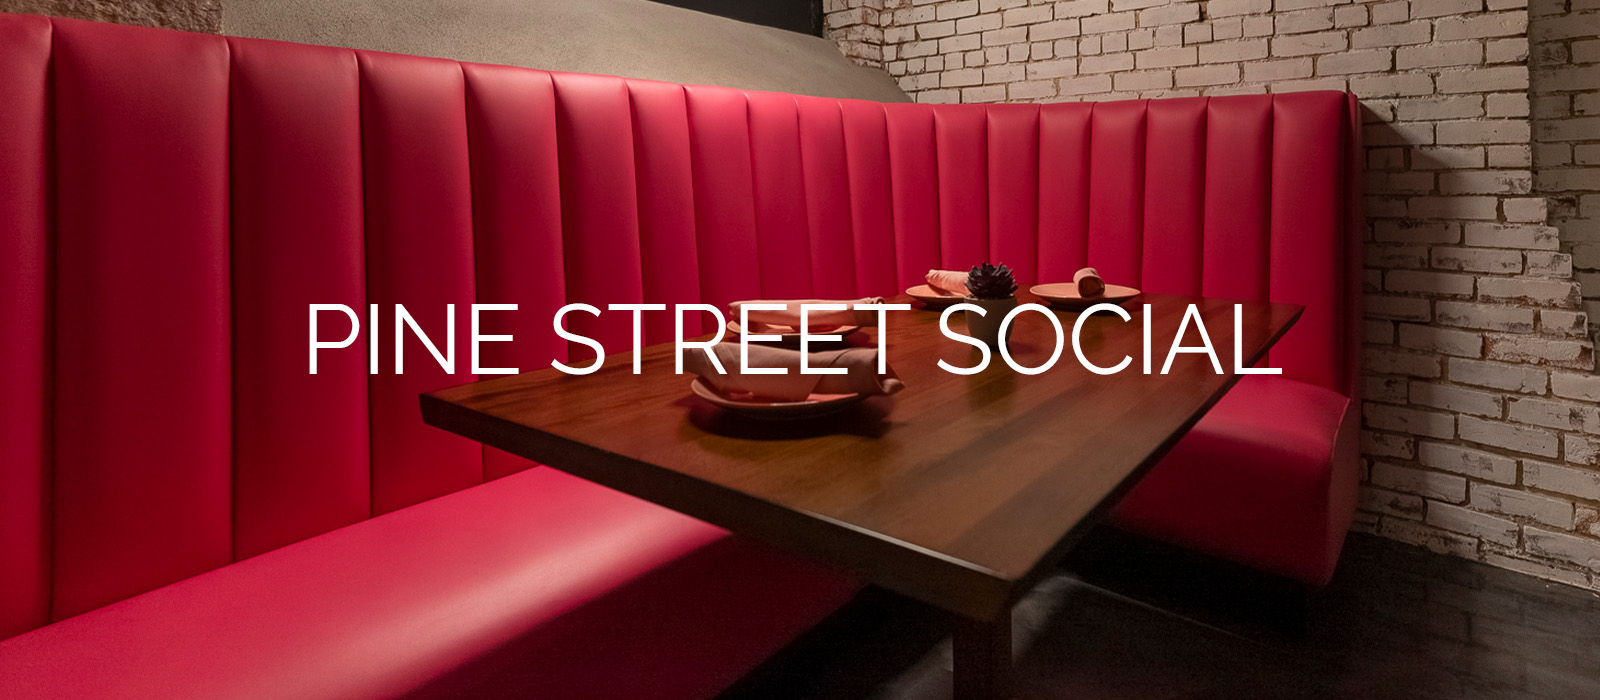 Pine Street Social